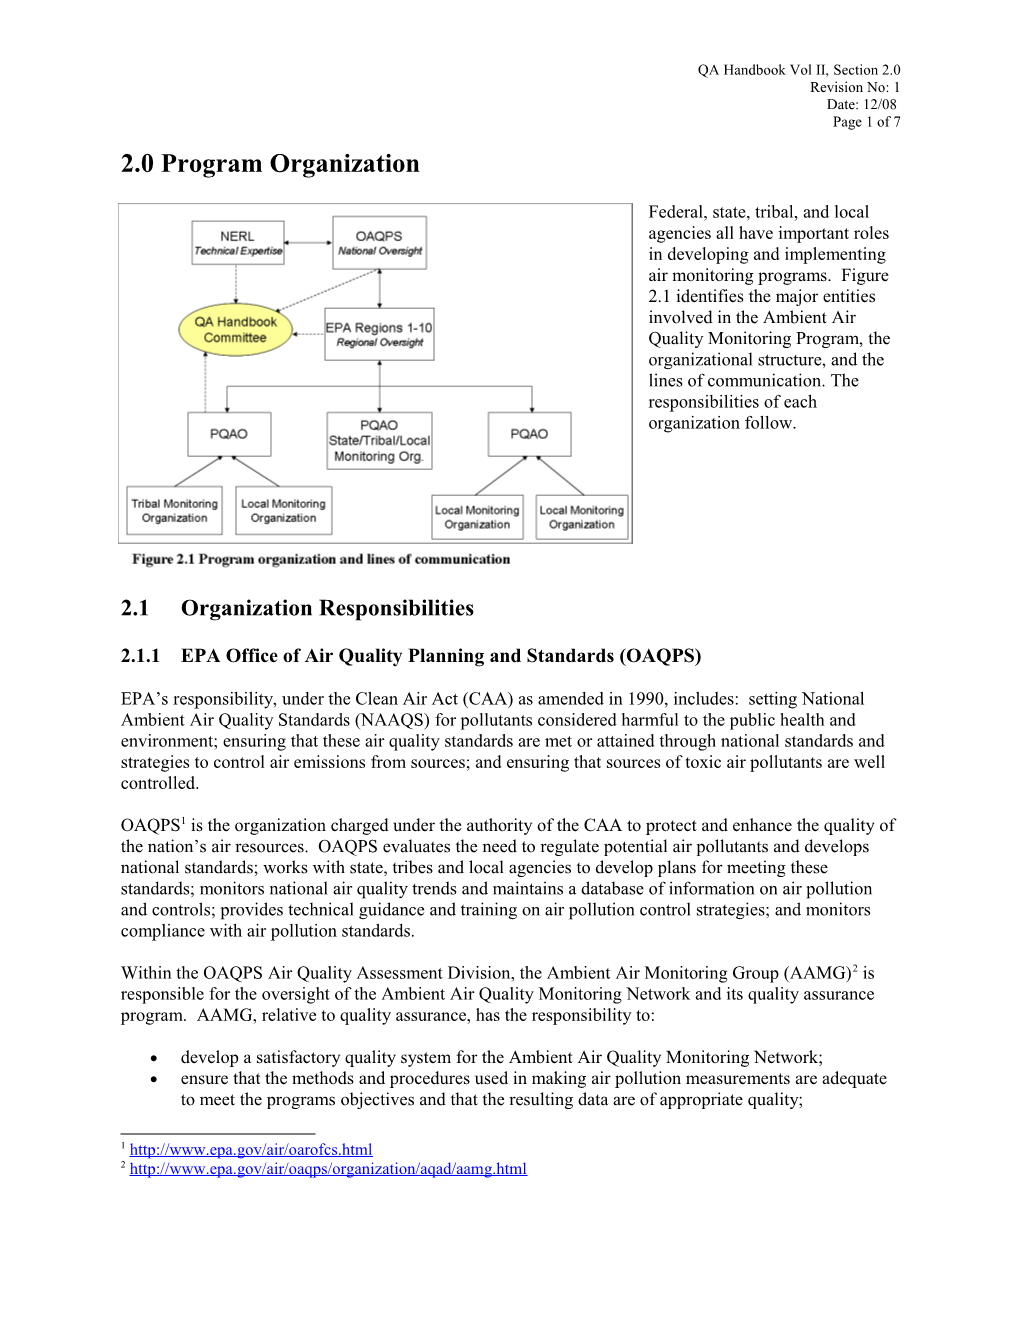 2.0 Program Organization